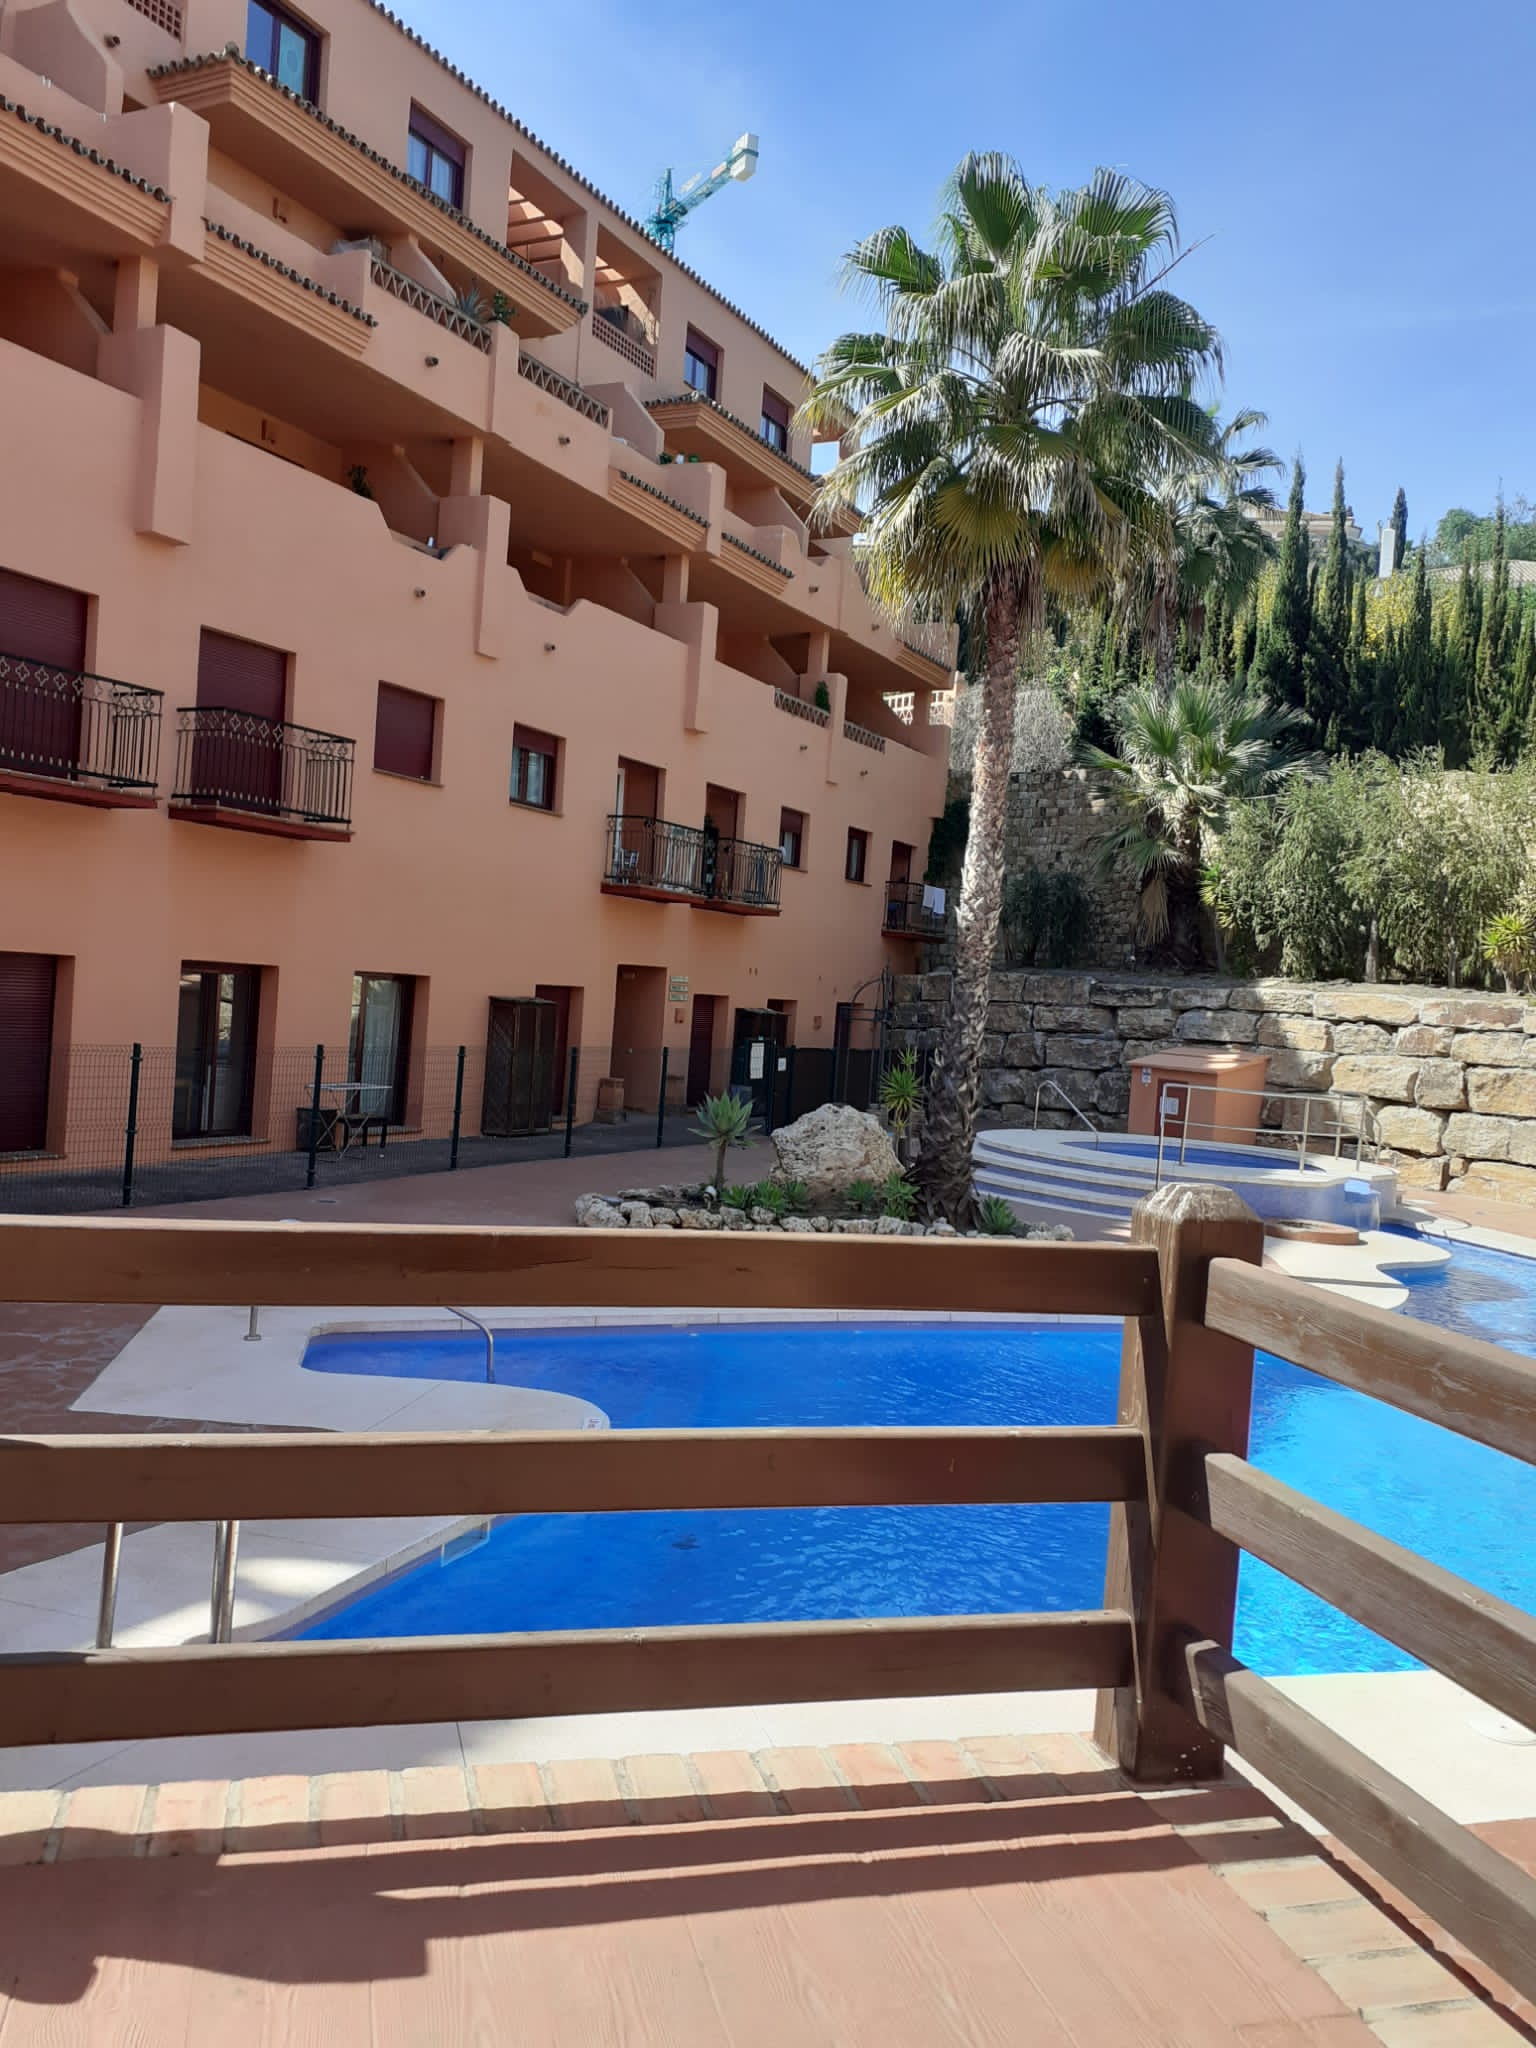 1 bedroom apartment in El Paraiso, Estepona for rent - mibgroup.es